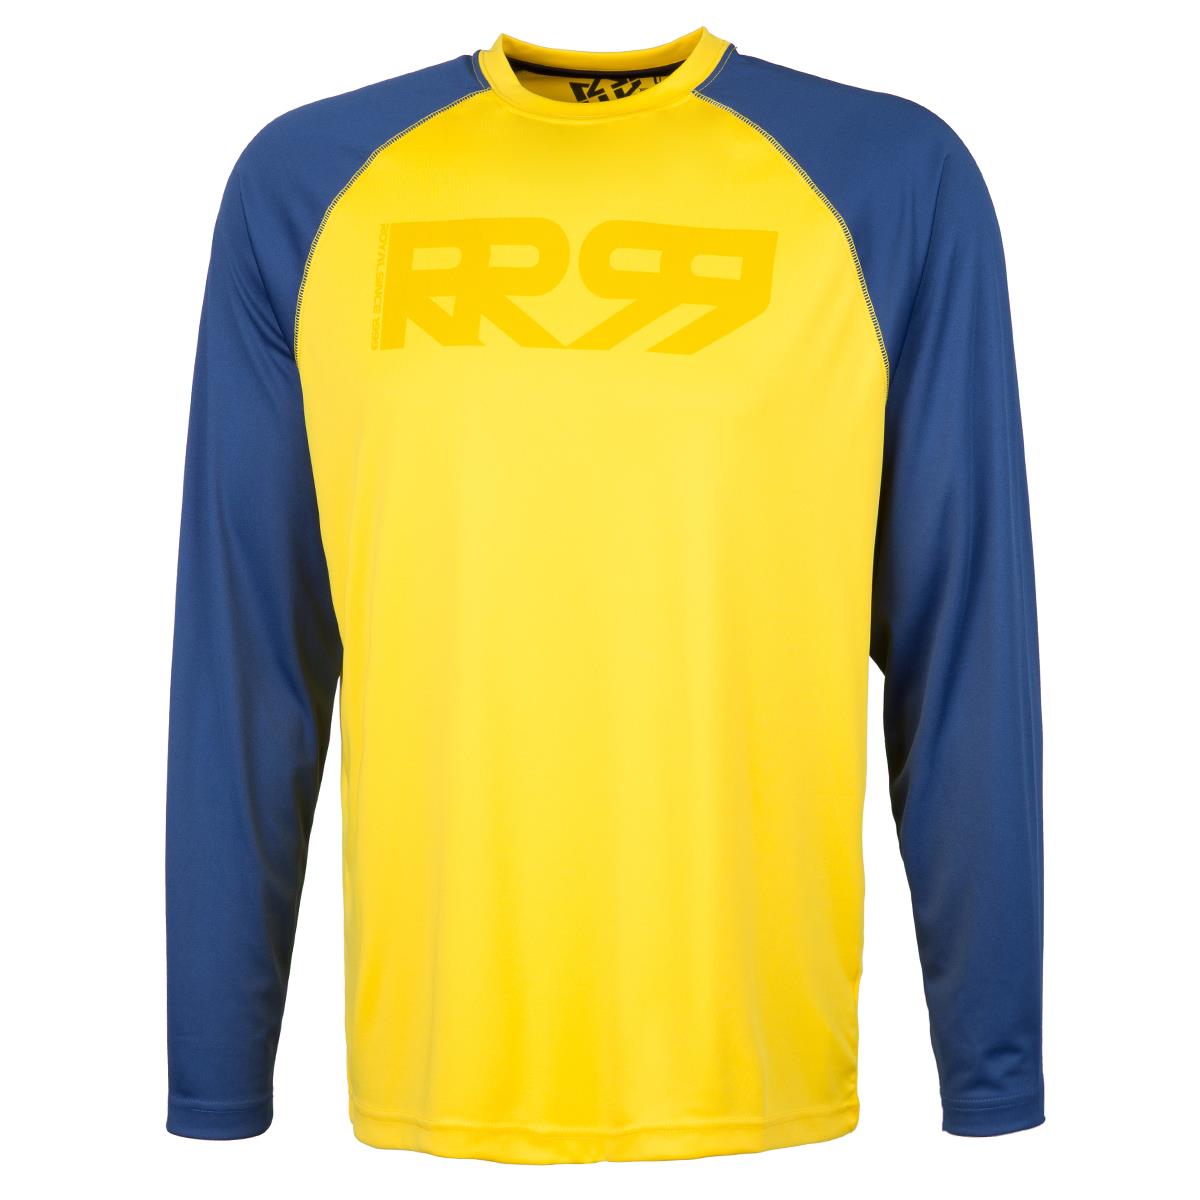 Royal Racing Bike Longsleeve Jersey Core Yellow/Blue